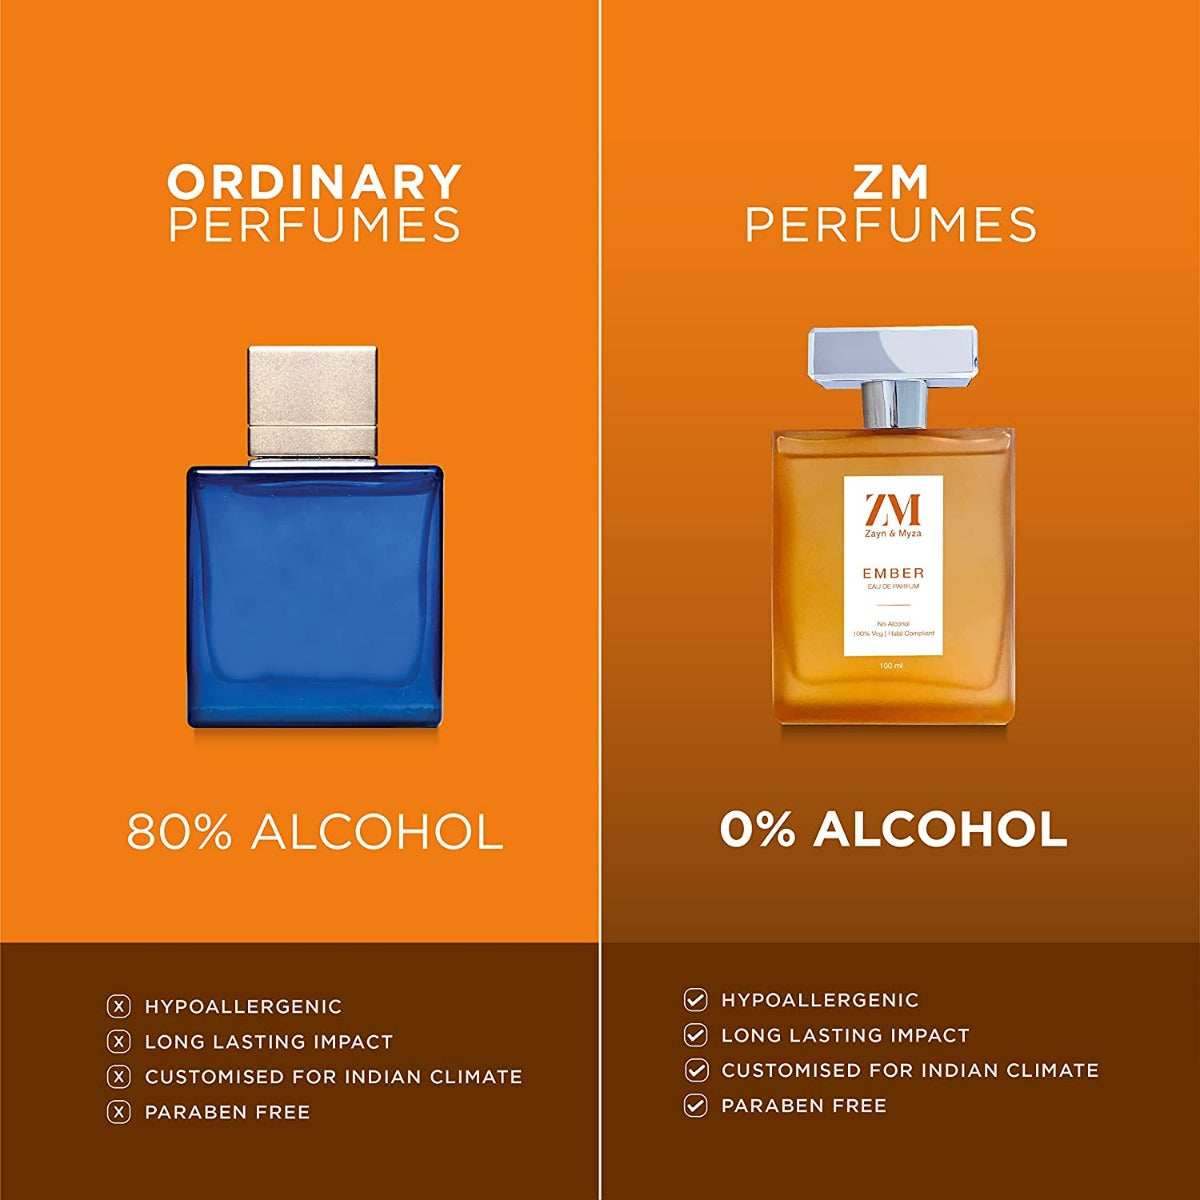 Zayn &amp; Myza No Alcohol Ember Perfume For Men (100ml)